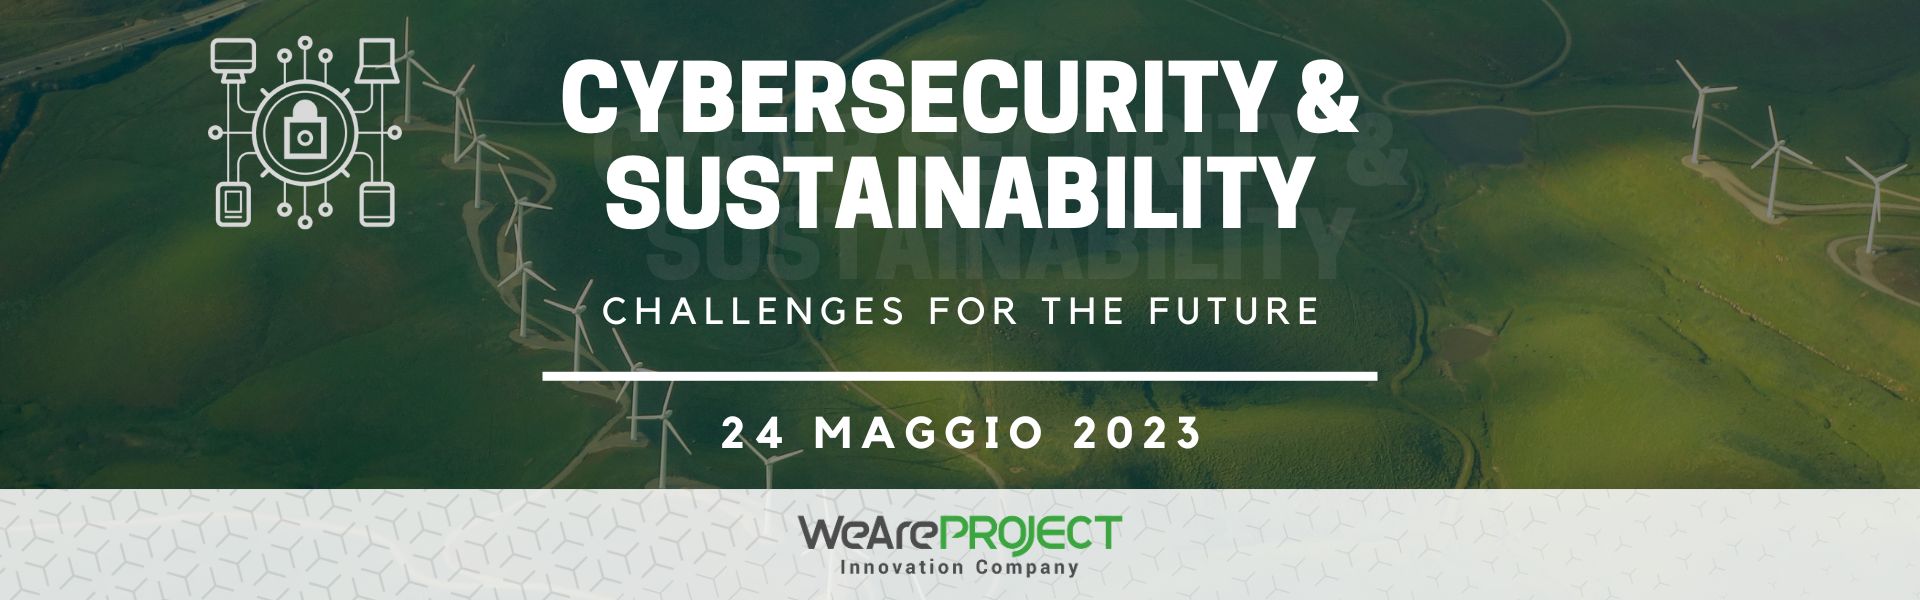 Cybersecurity e Sustainability di WeArePROJECT